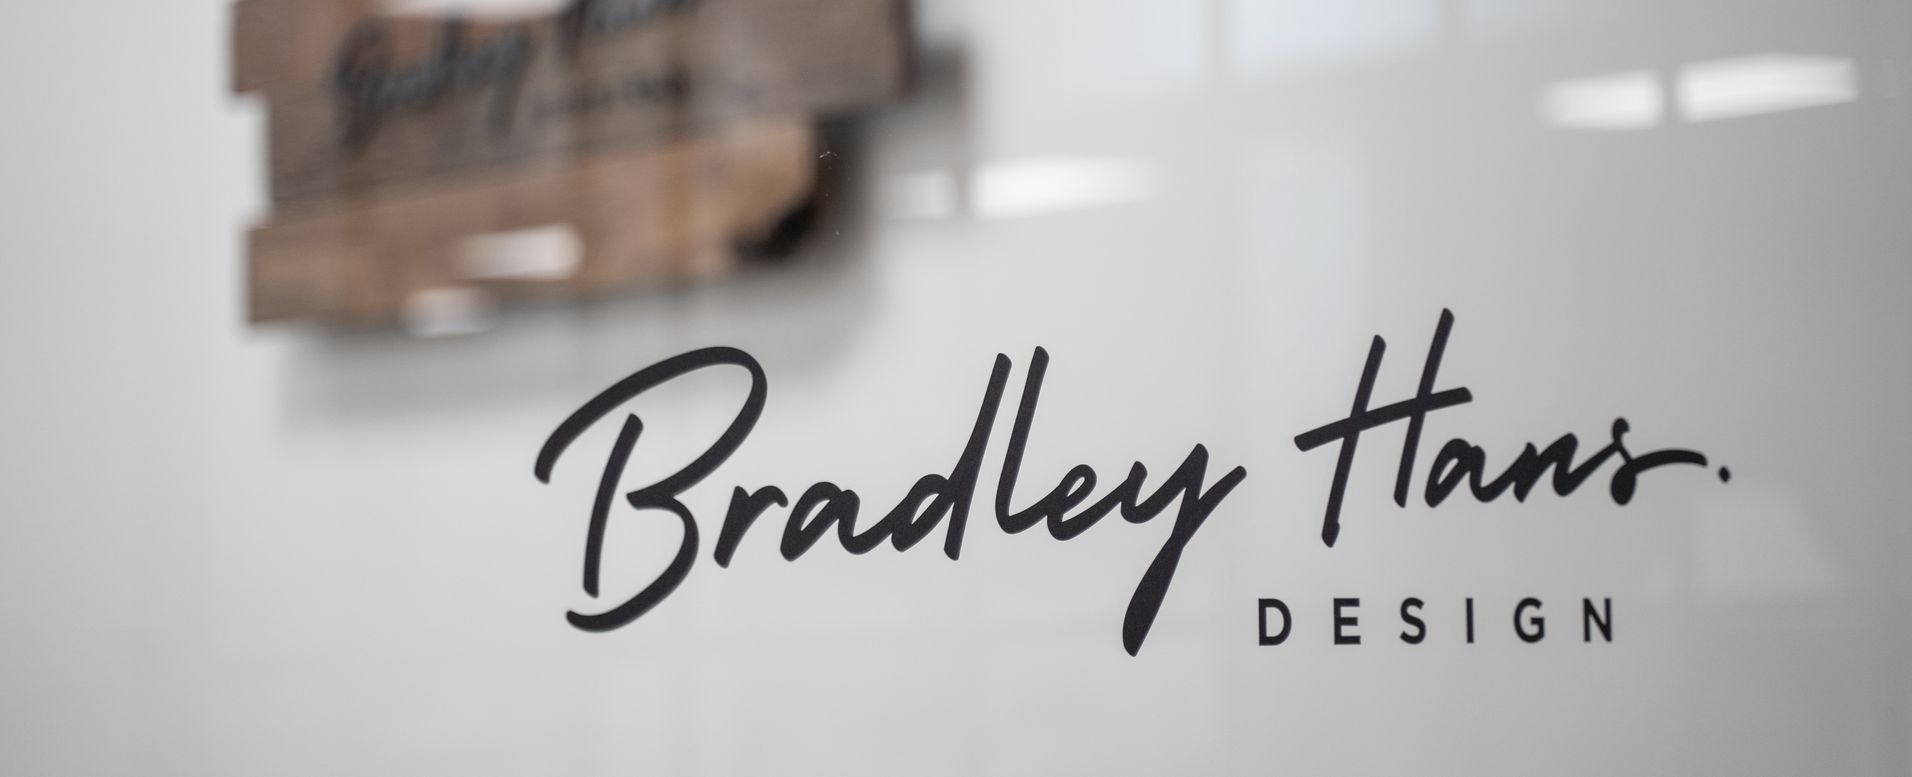 Bradley Hans Design Banner image